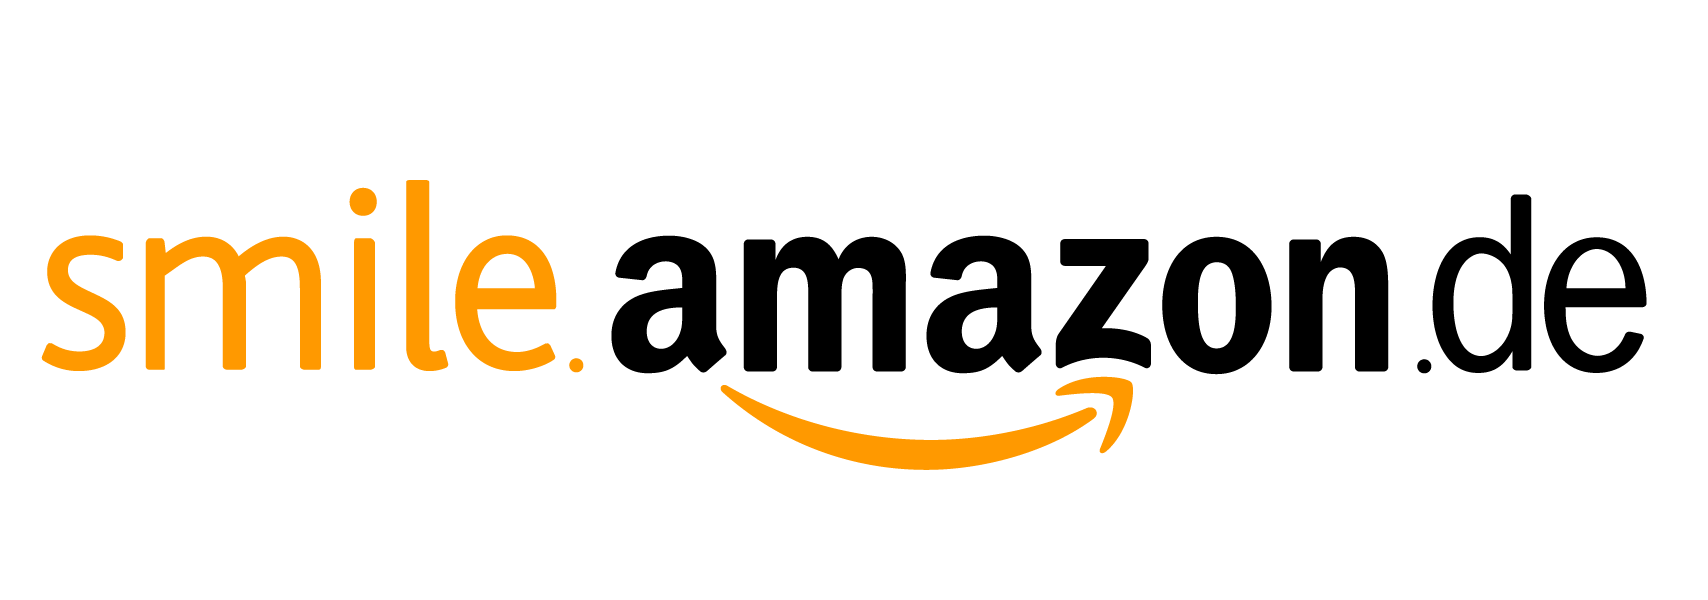 DE AmazonSmile Logo RGB blackorange SMALL ONLY